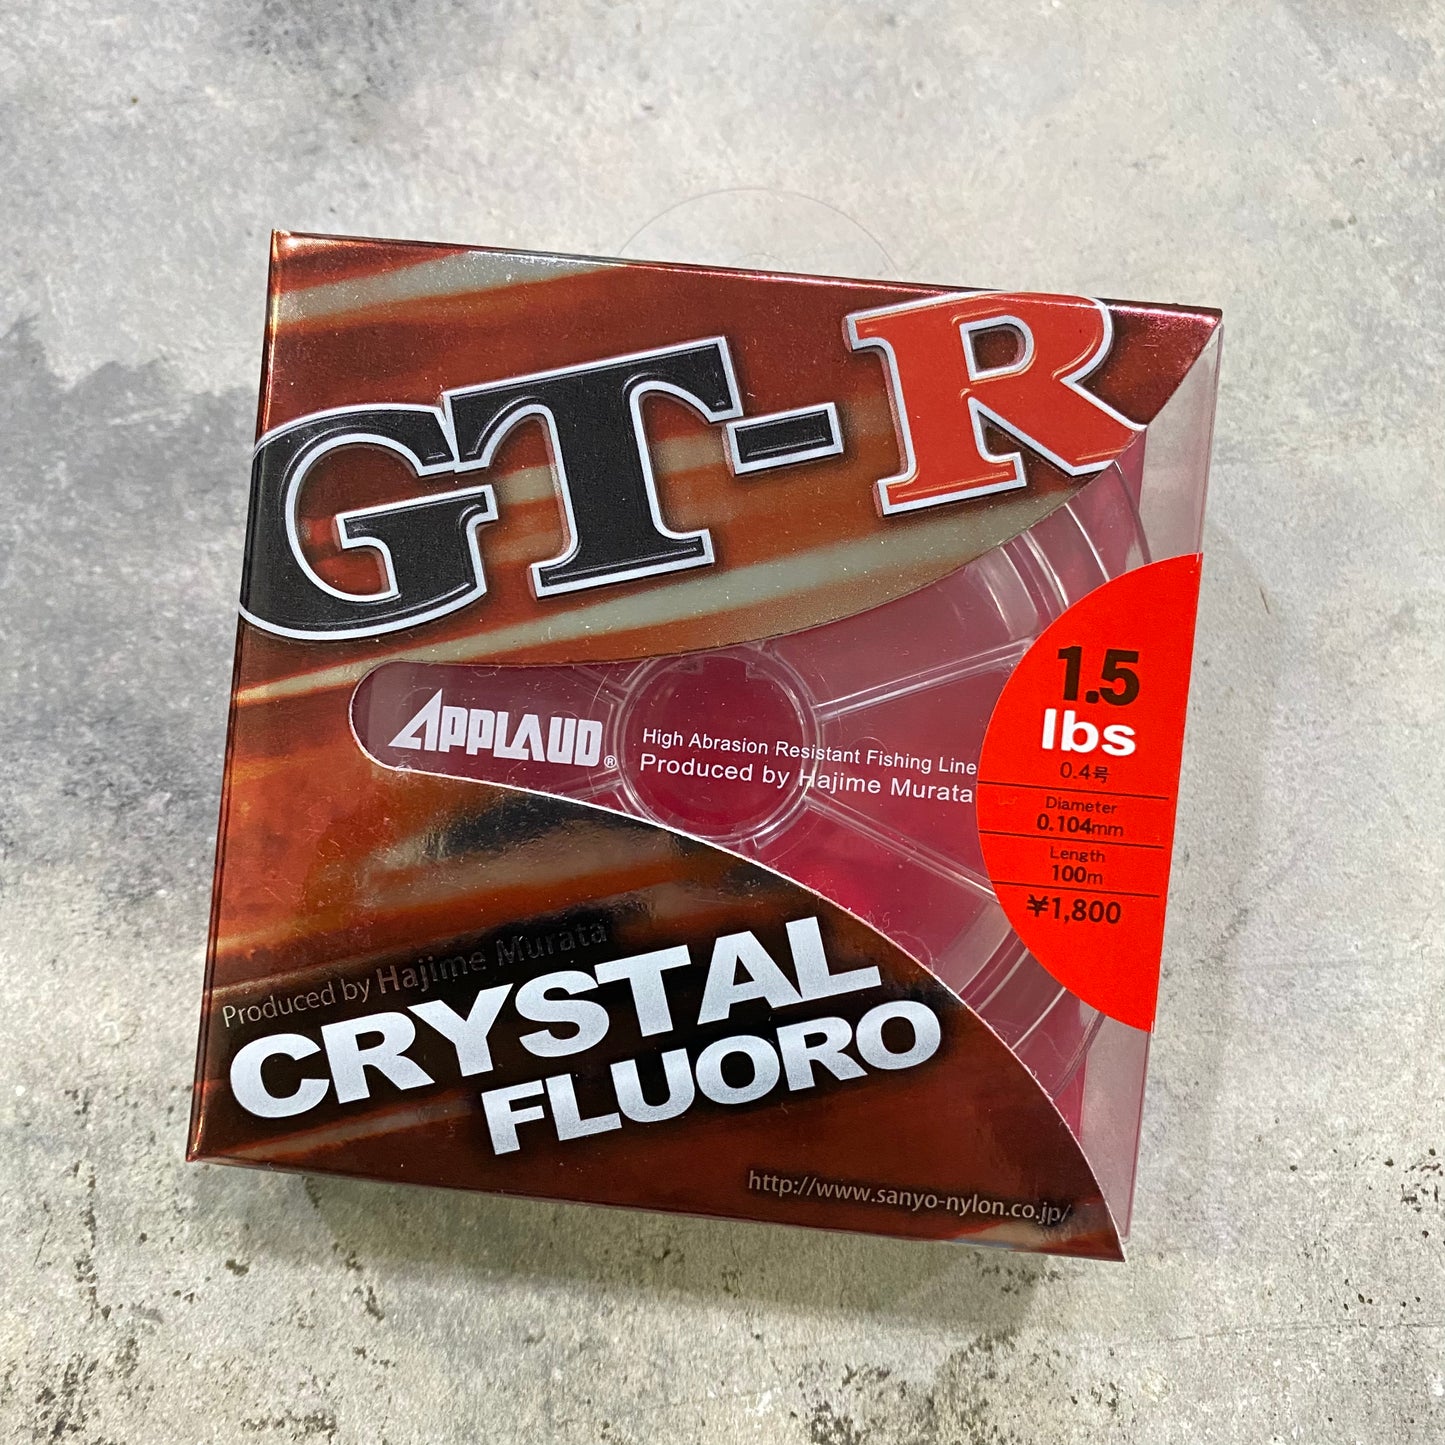 Tepuk dada GT-R Crystal Fluoro